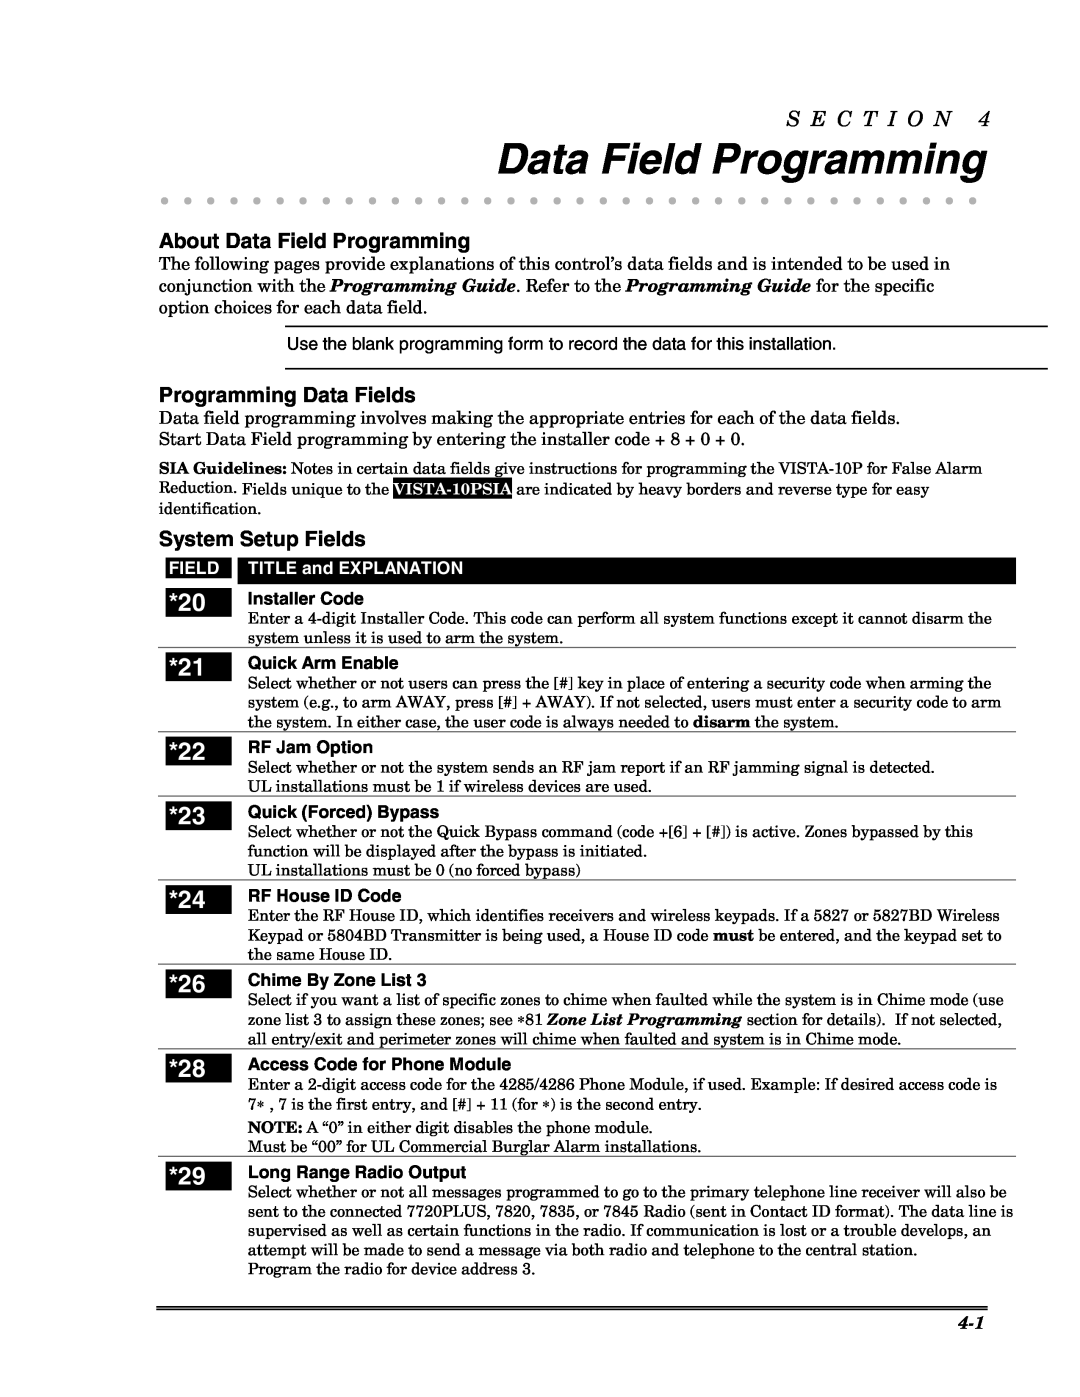 Honeywell VISTA-10PSIA About Data Field Programming, Programming Data Fields, System Setup Fields, S E C T I O N 